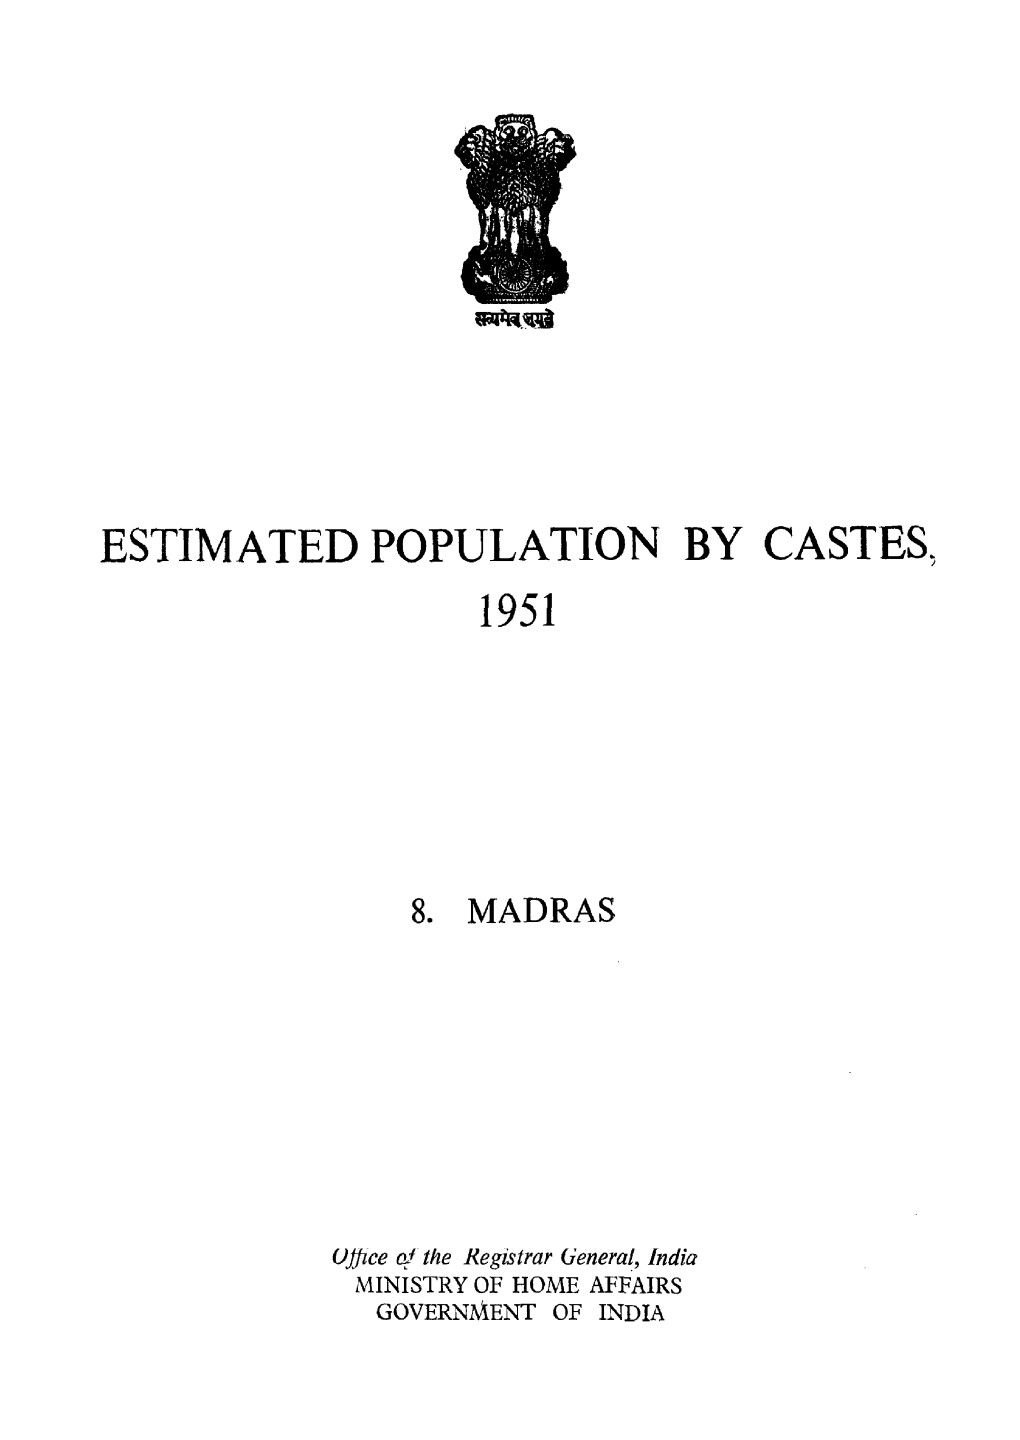 Estimated Population by Castes, Madras